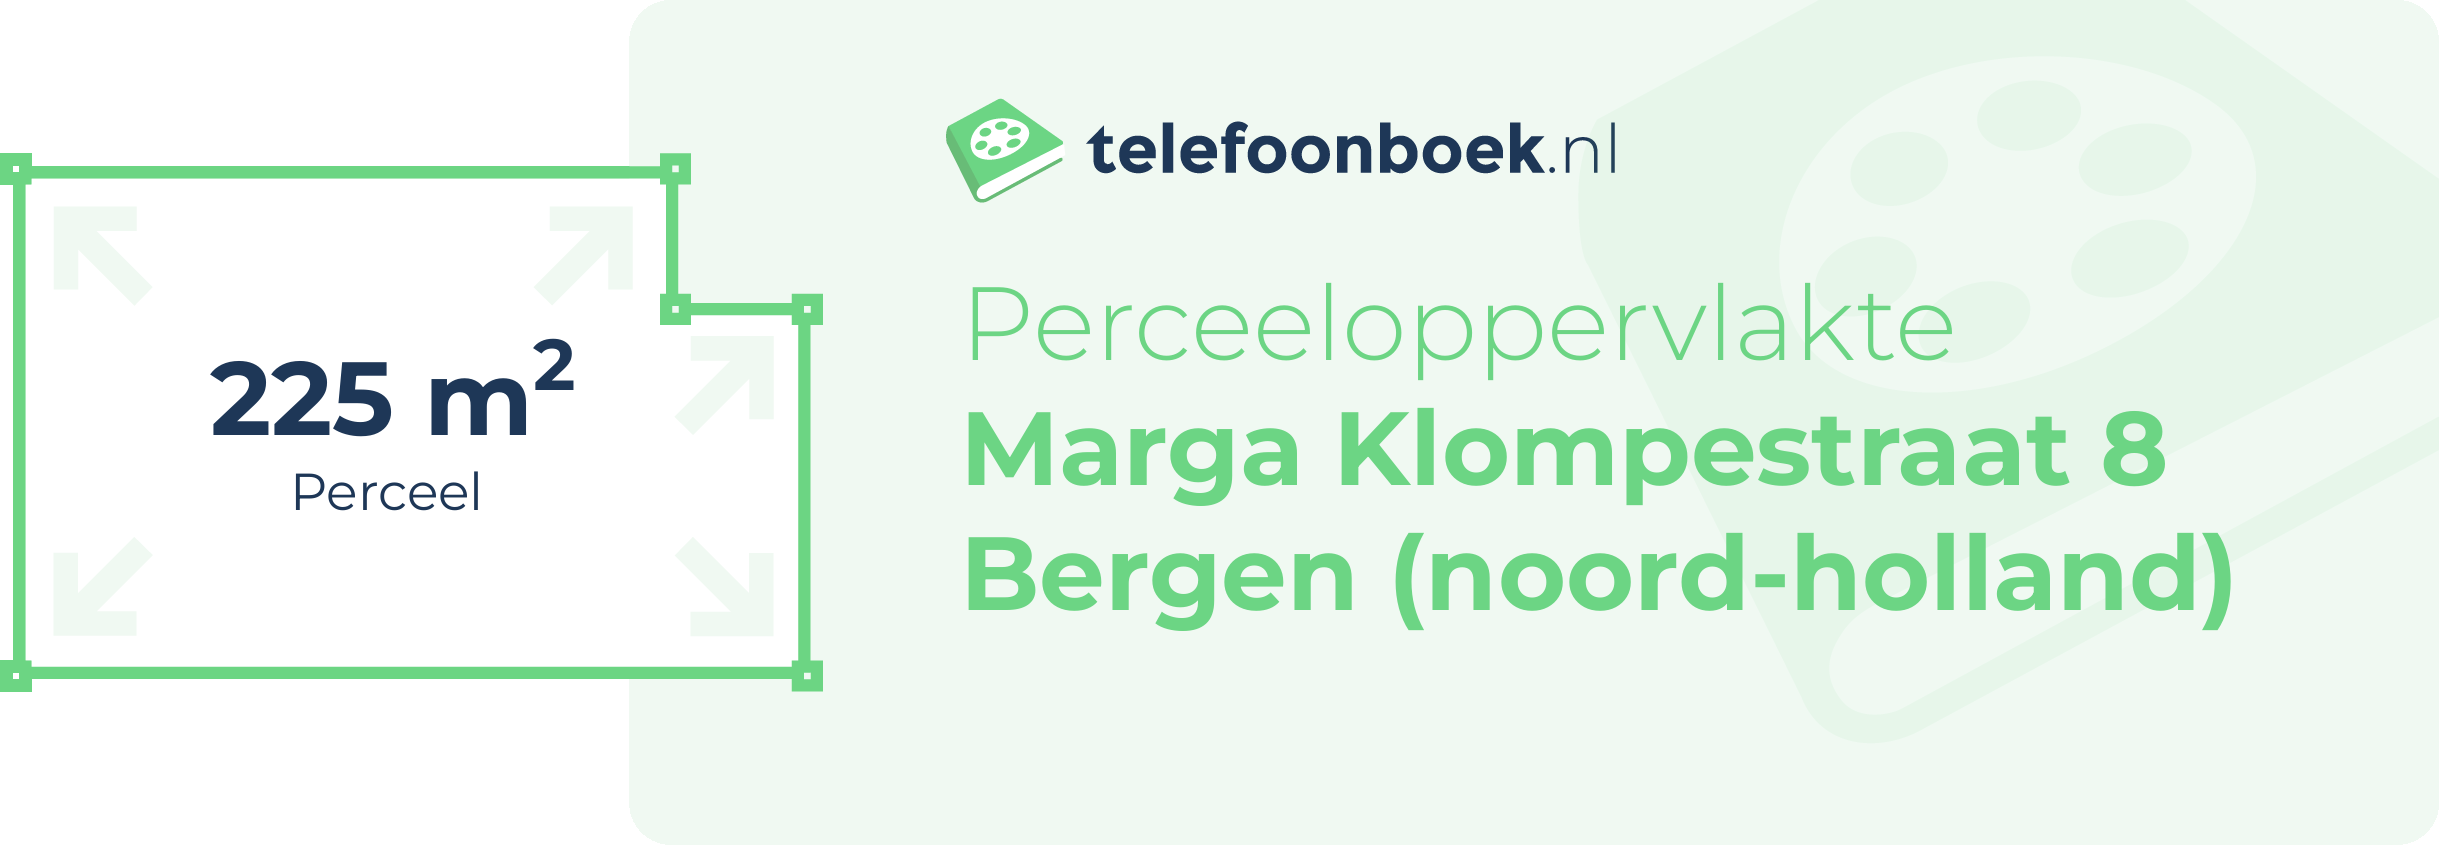 Perceeloppervlakte Marga Klompestraat 8 Bergen (Noord-Holland)